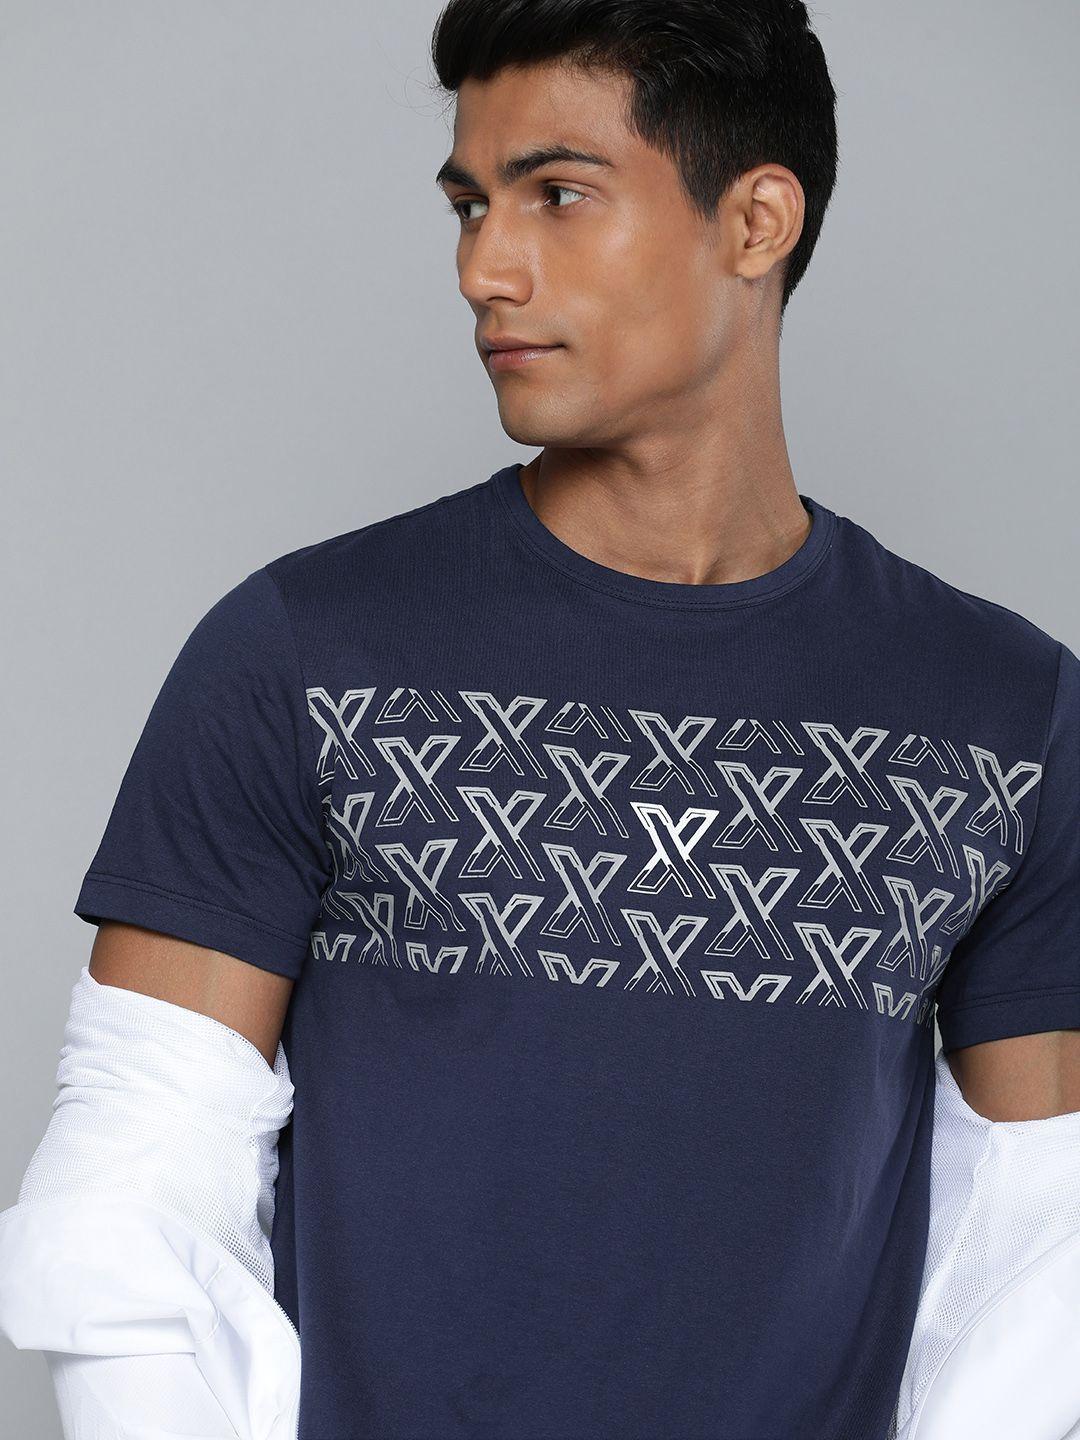 hrx-by-hrithik-roshan-men-navy-blue-typography-printed-pure-cotton-t-shirt